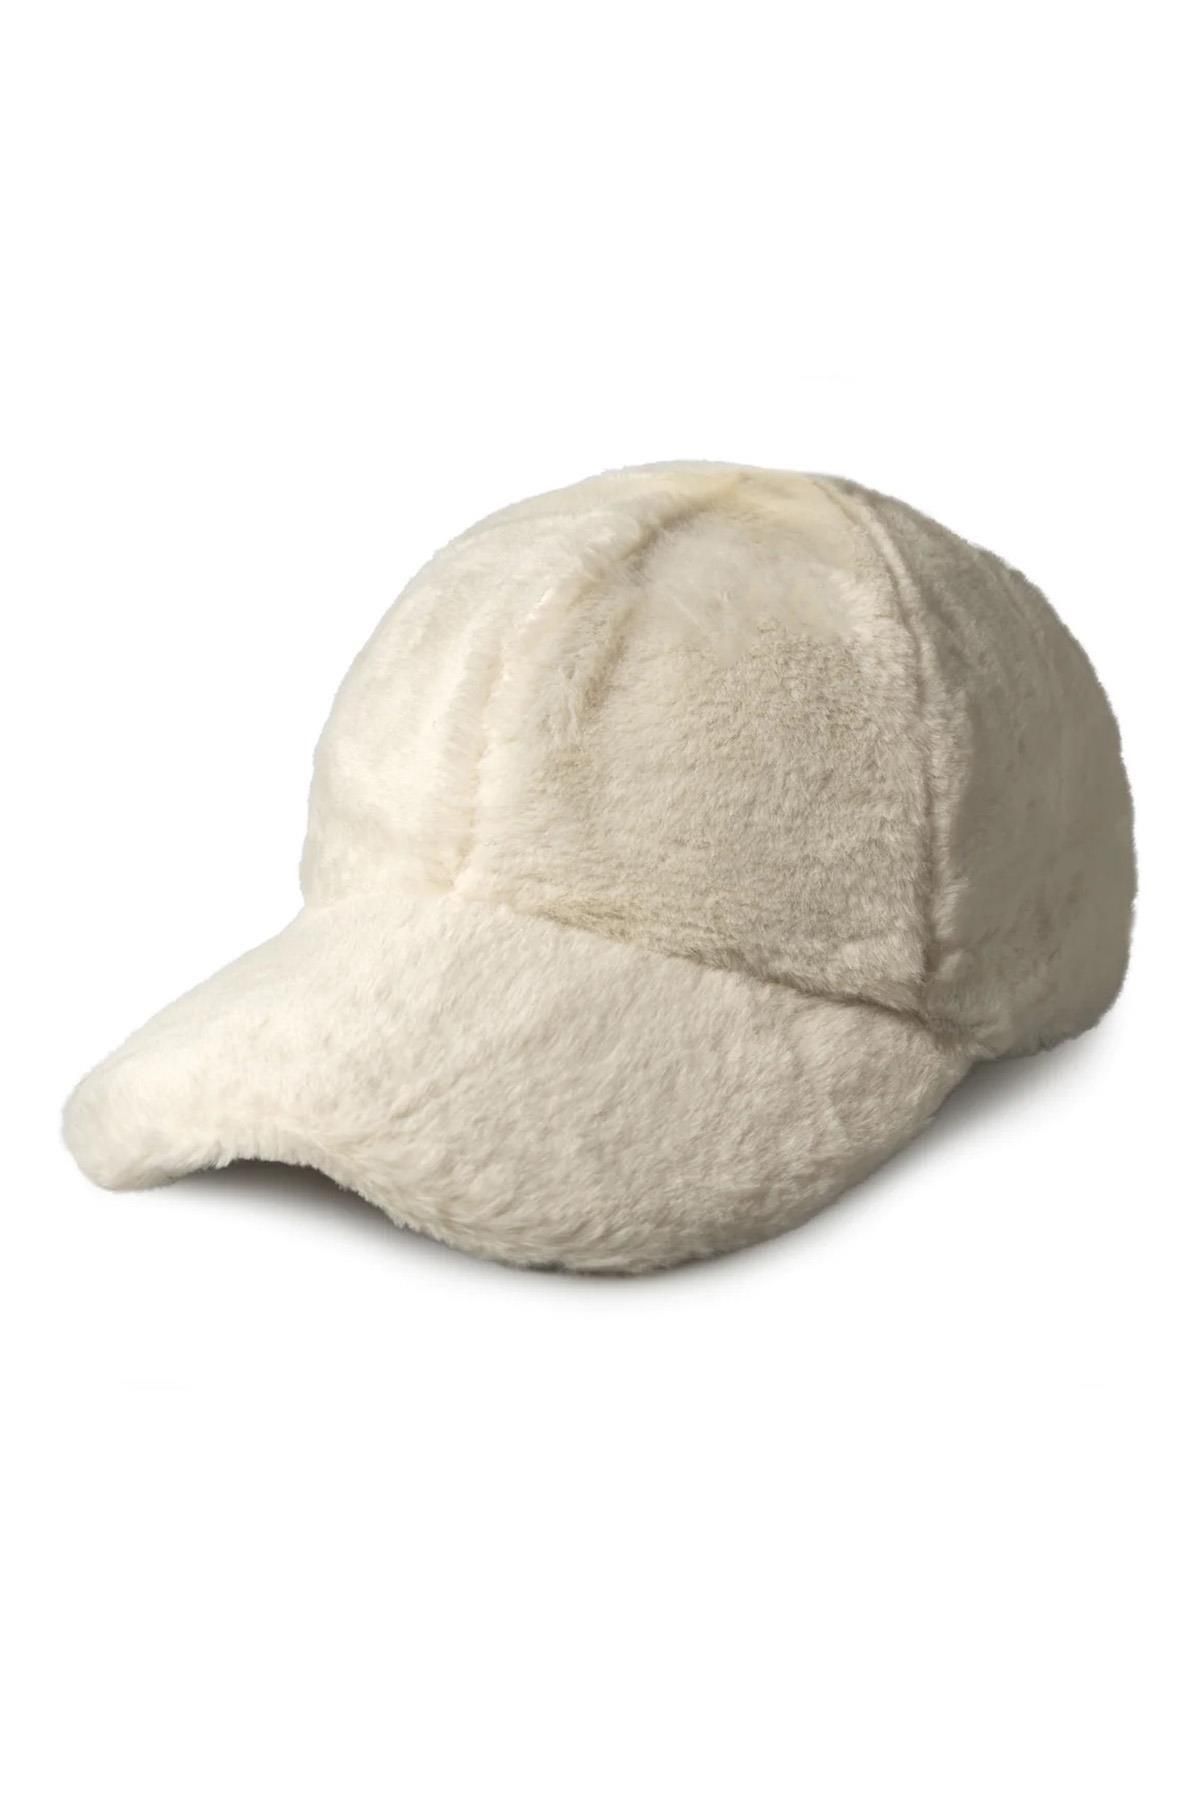 BAHELS Trend Bej Peluş Cap Şapka